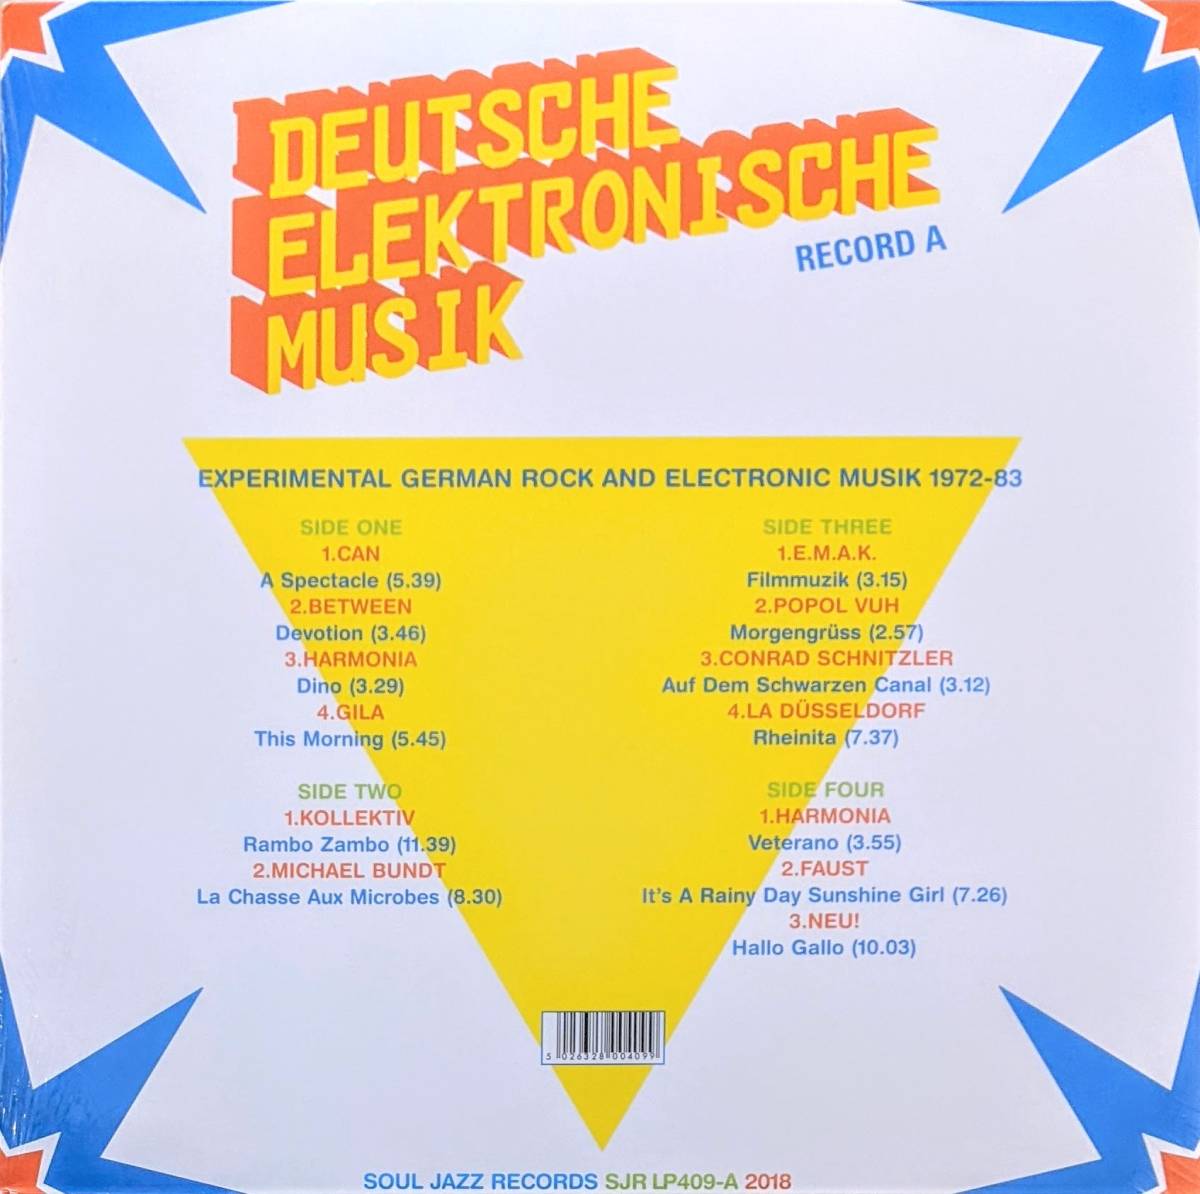 Deutsche Elektronische Musik (Experimental German Rock And Electronic Musik 1972-83) (Record A) - 限定二枚組アナログ・レコード